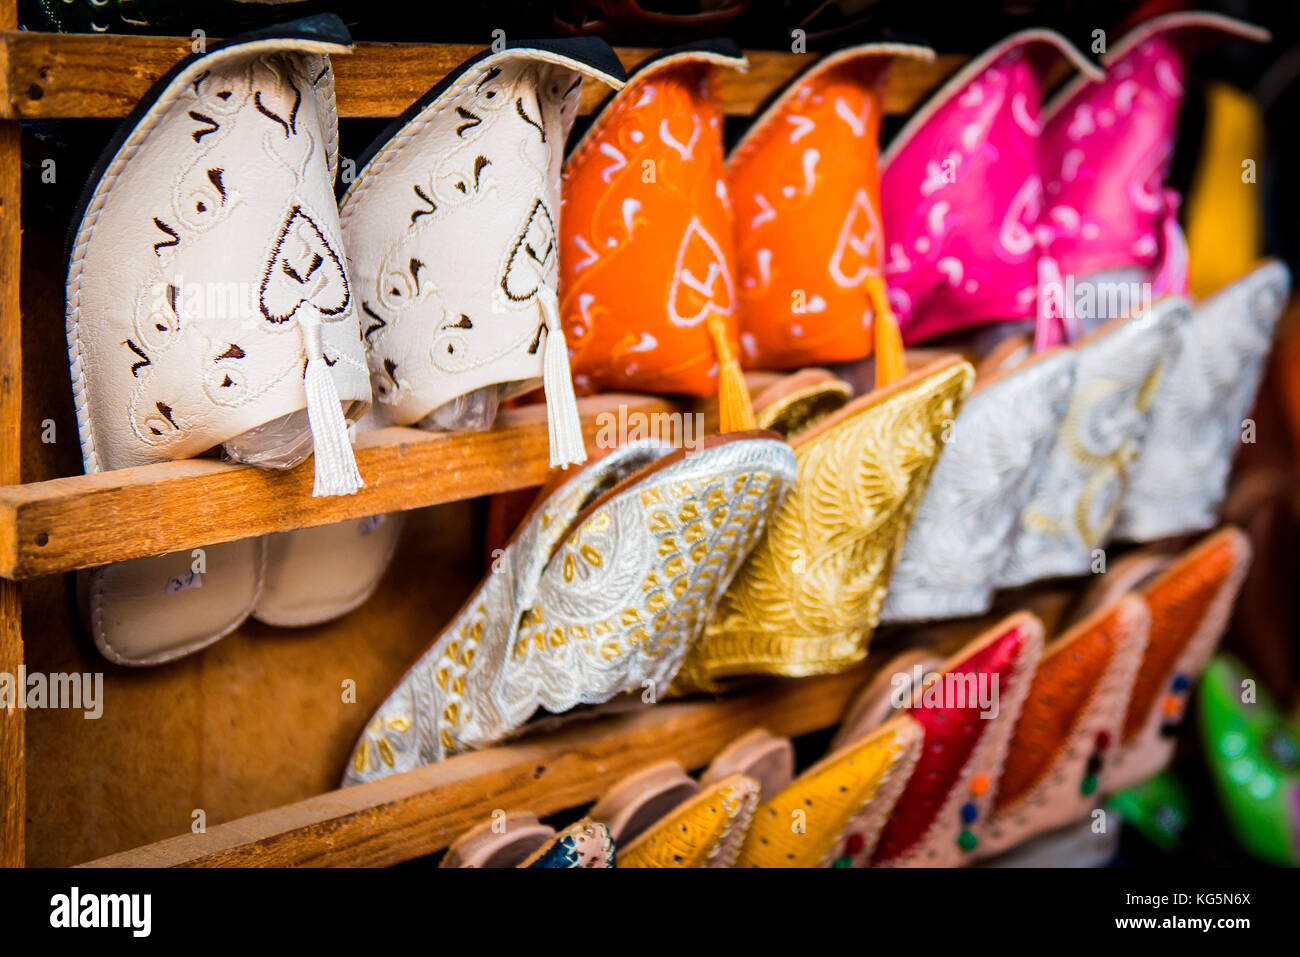 Zapatos típicos marroquíes fotografías e imágenes de alta resolución - Alamy